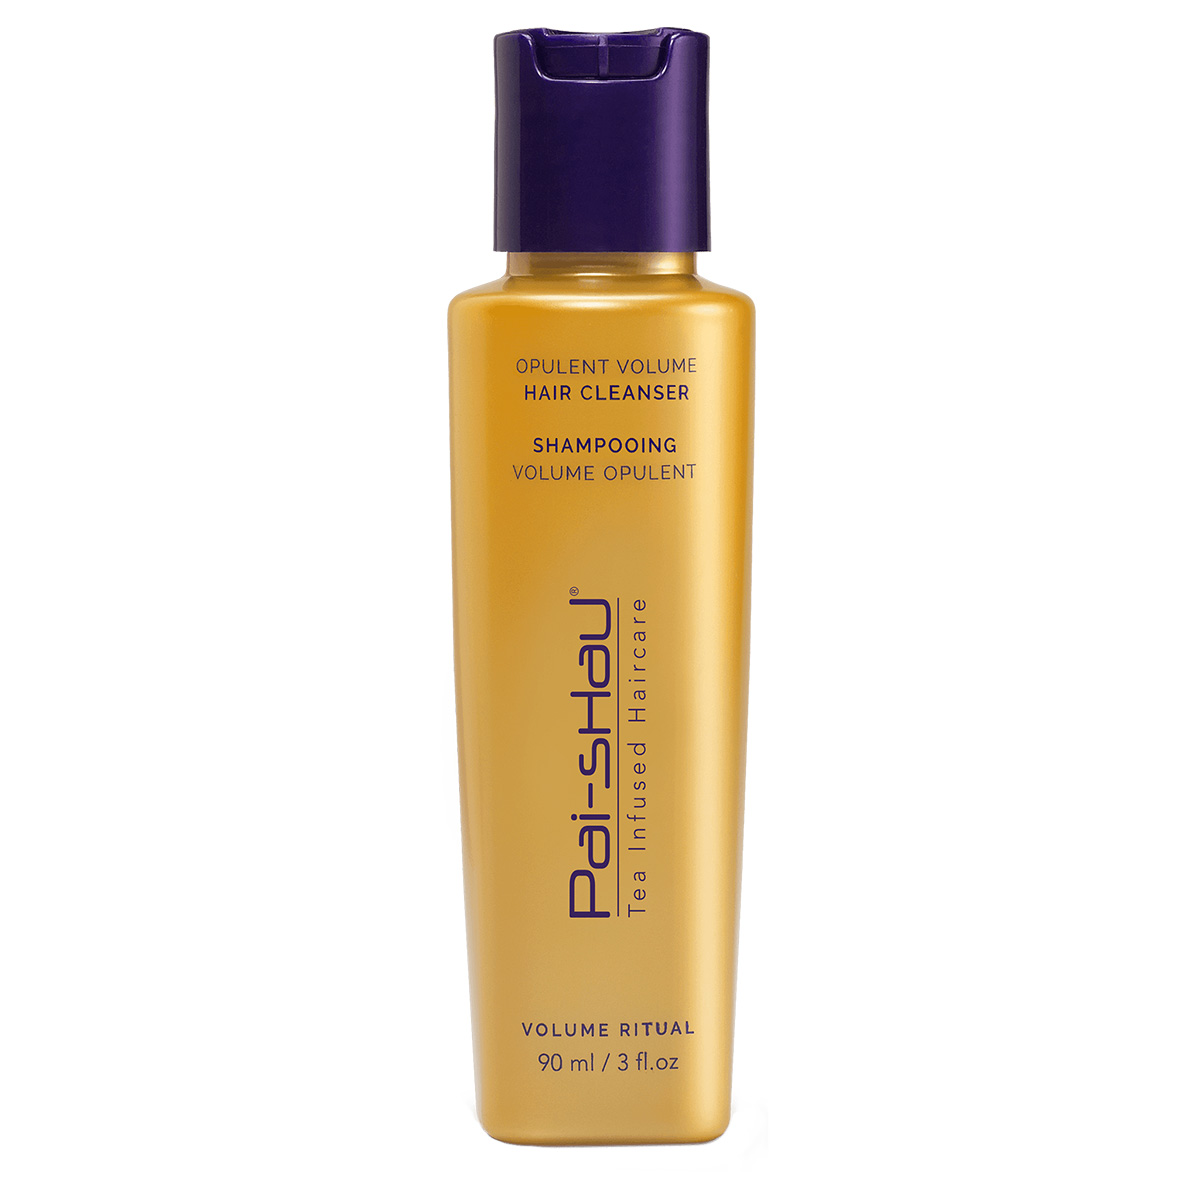 opulent volume hair cleanser (shampoo de cabello)